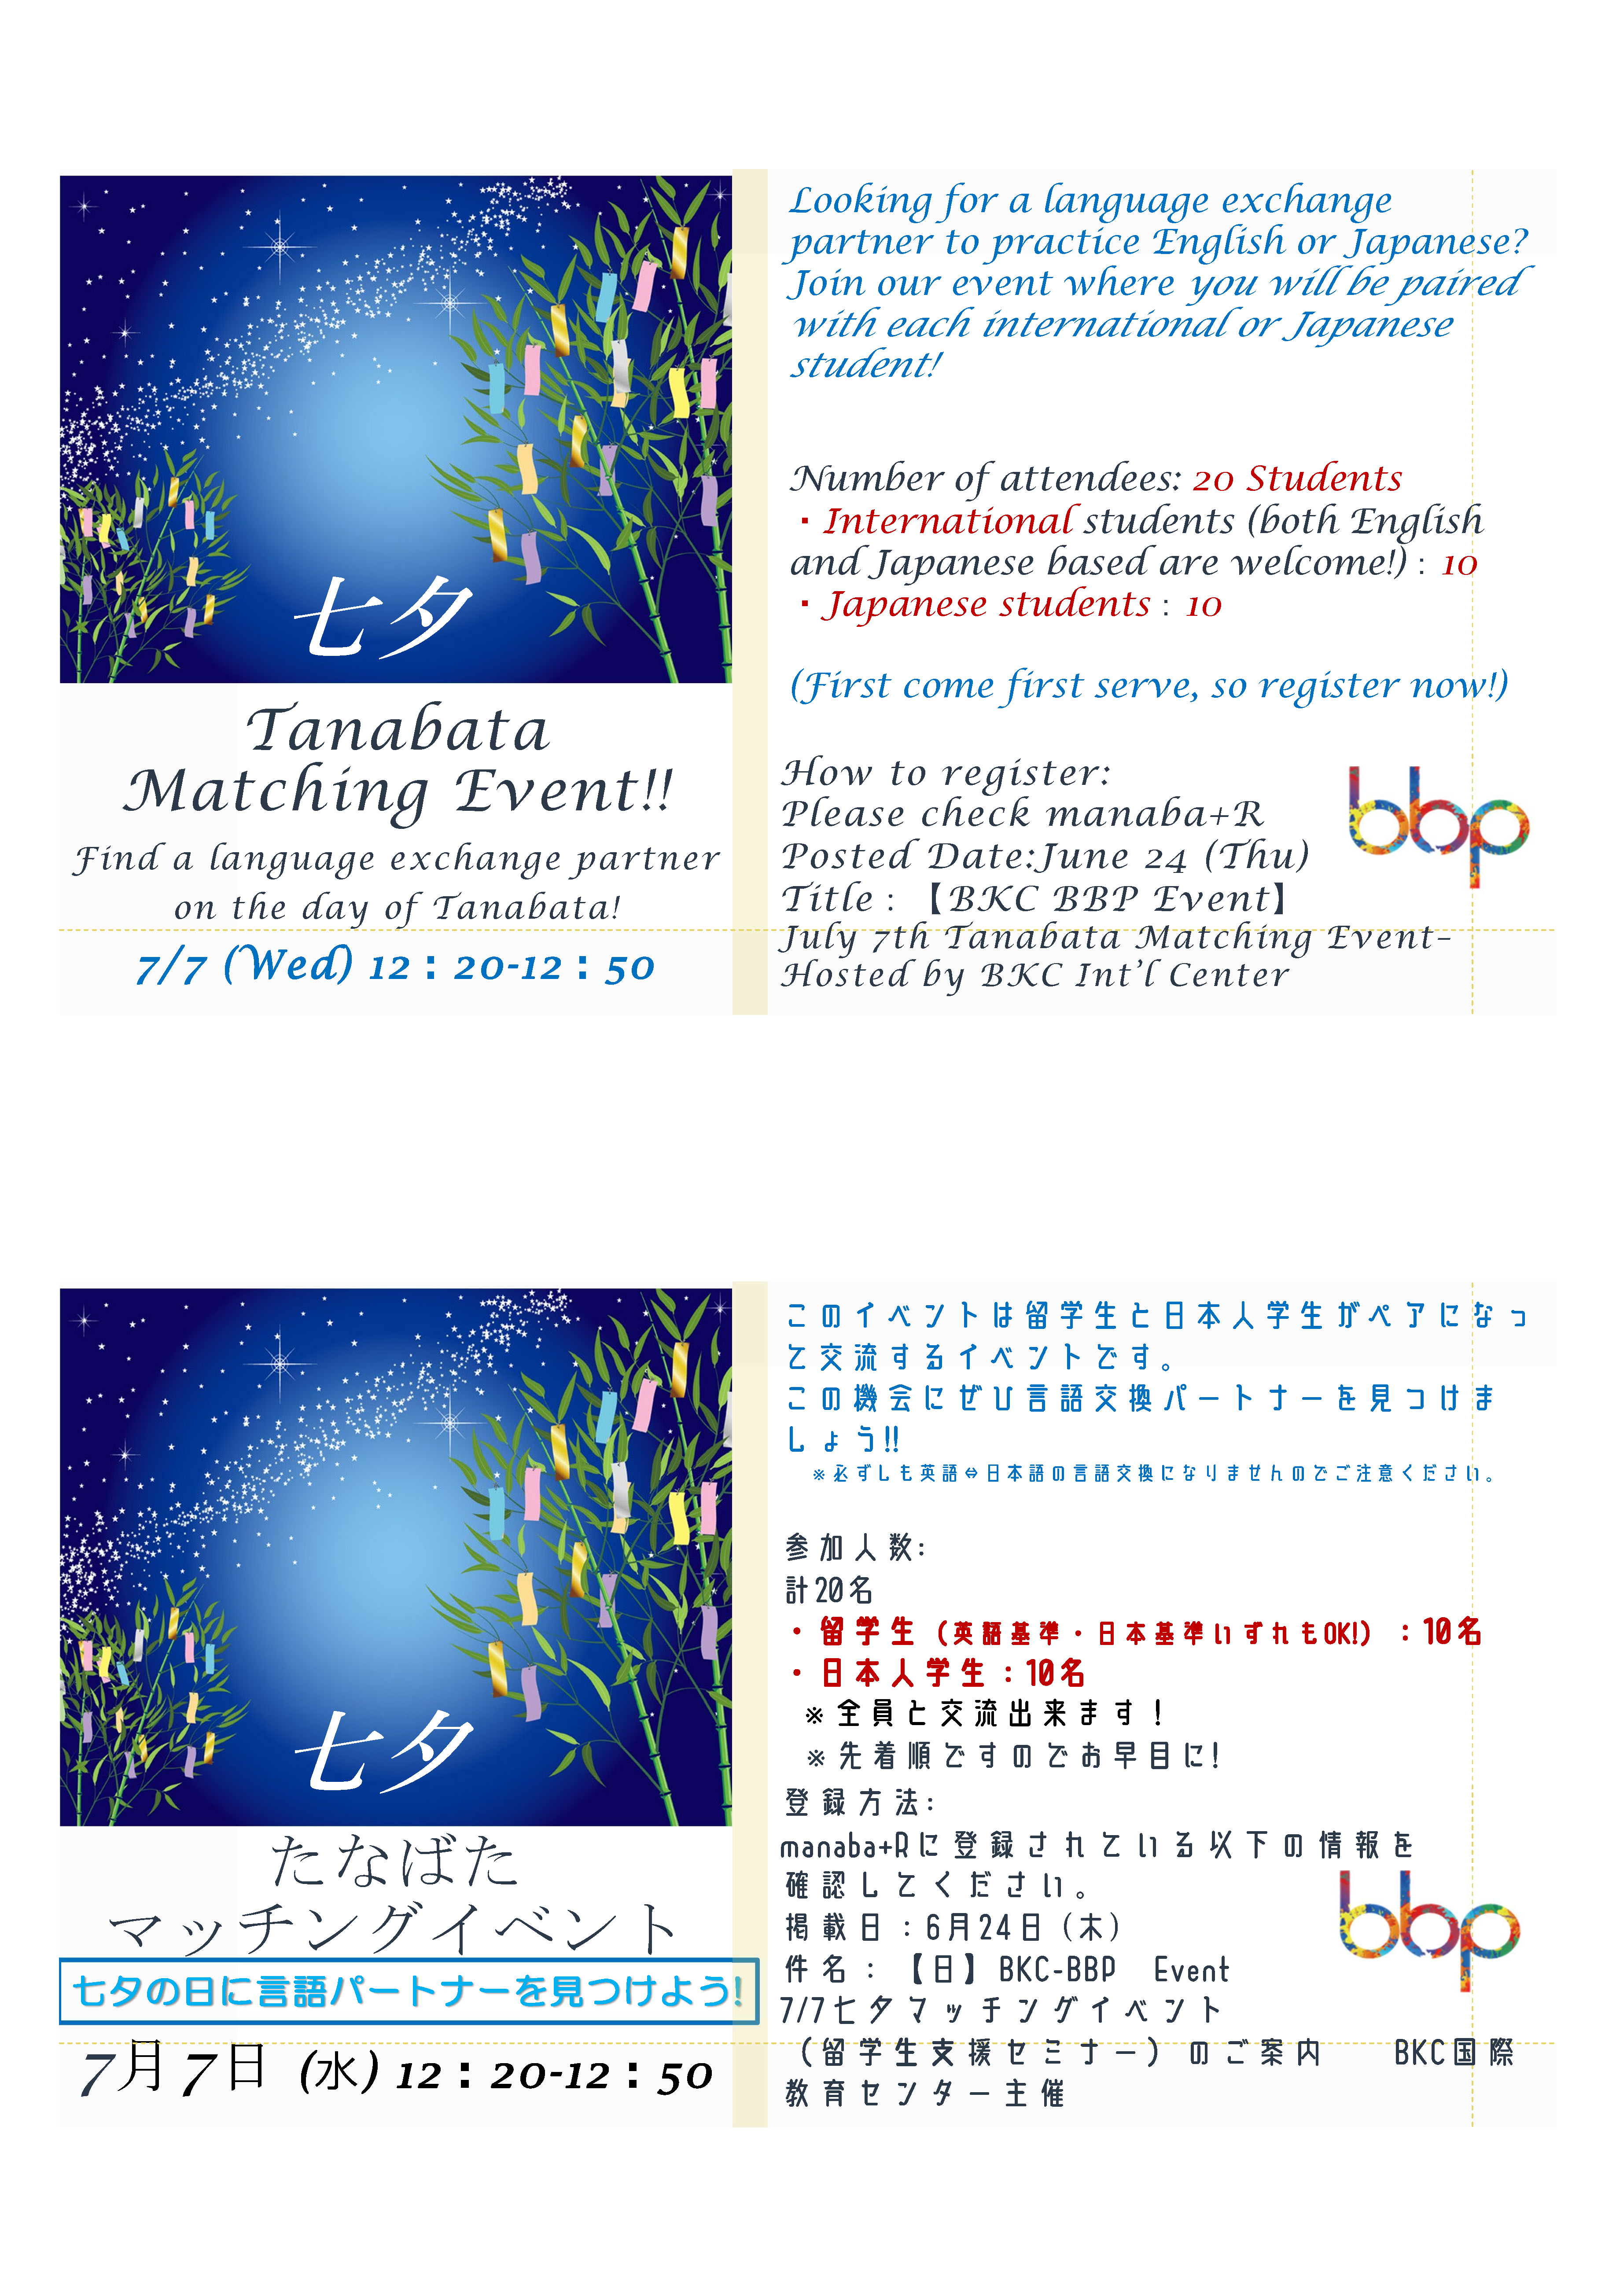 (BKC)】BKC-BBP　Event　7/7七夕マッチングイベント /July 7th  Tanabata Matching Event